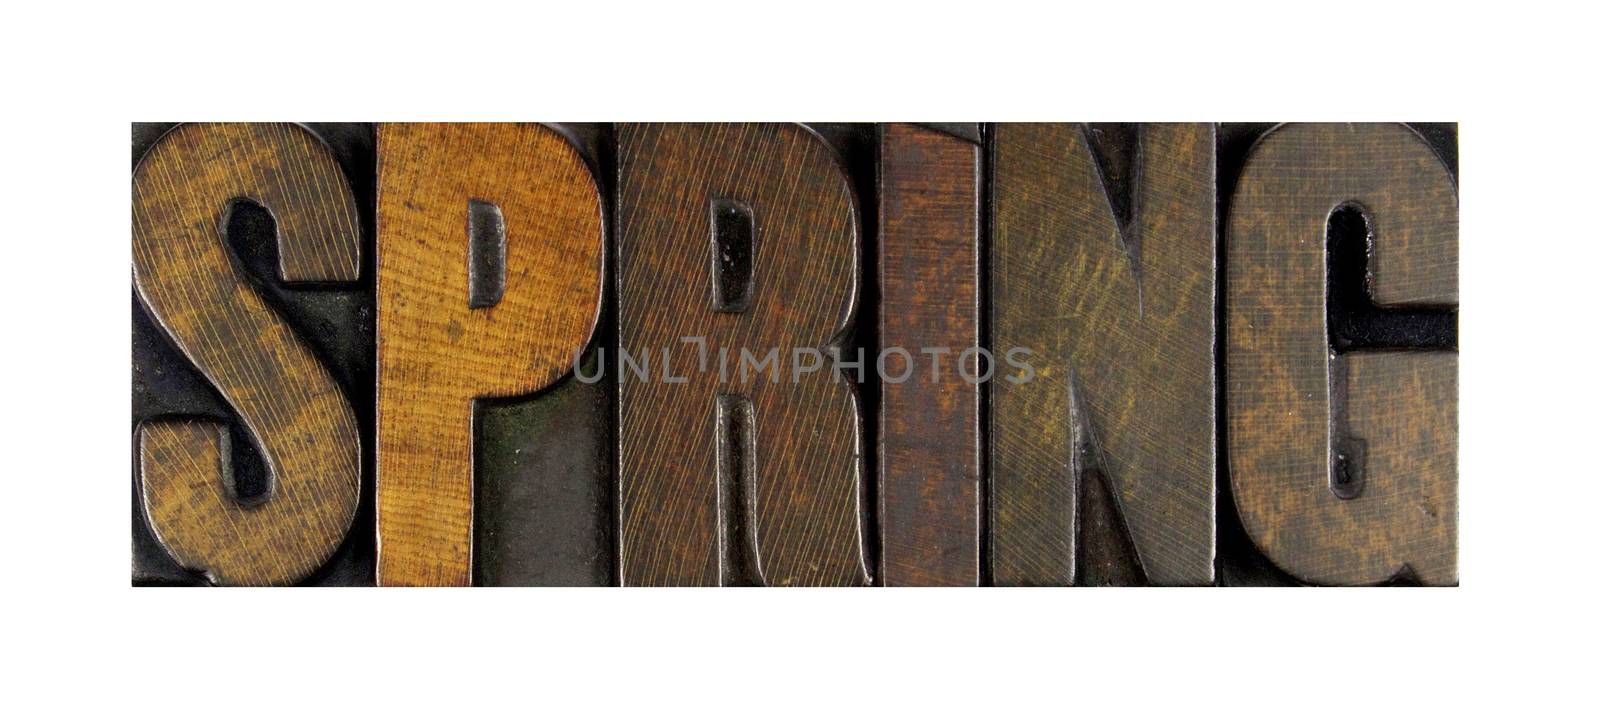 The word SPRING written in vintage letterpress type